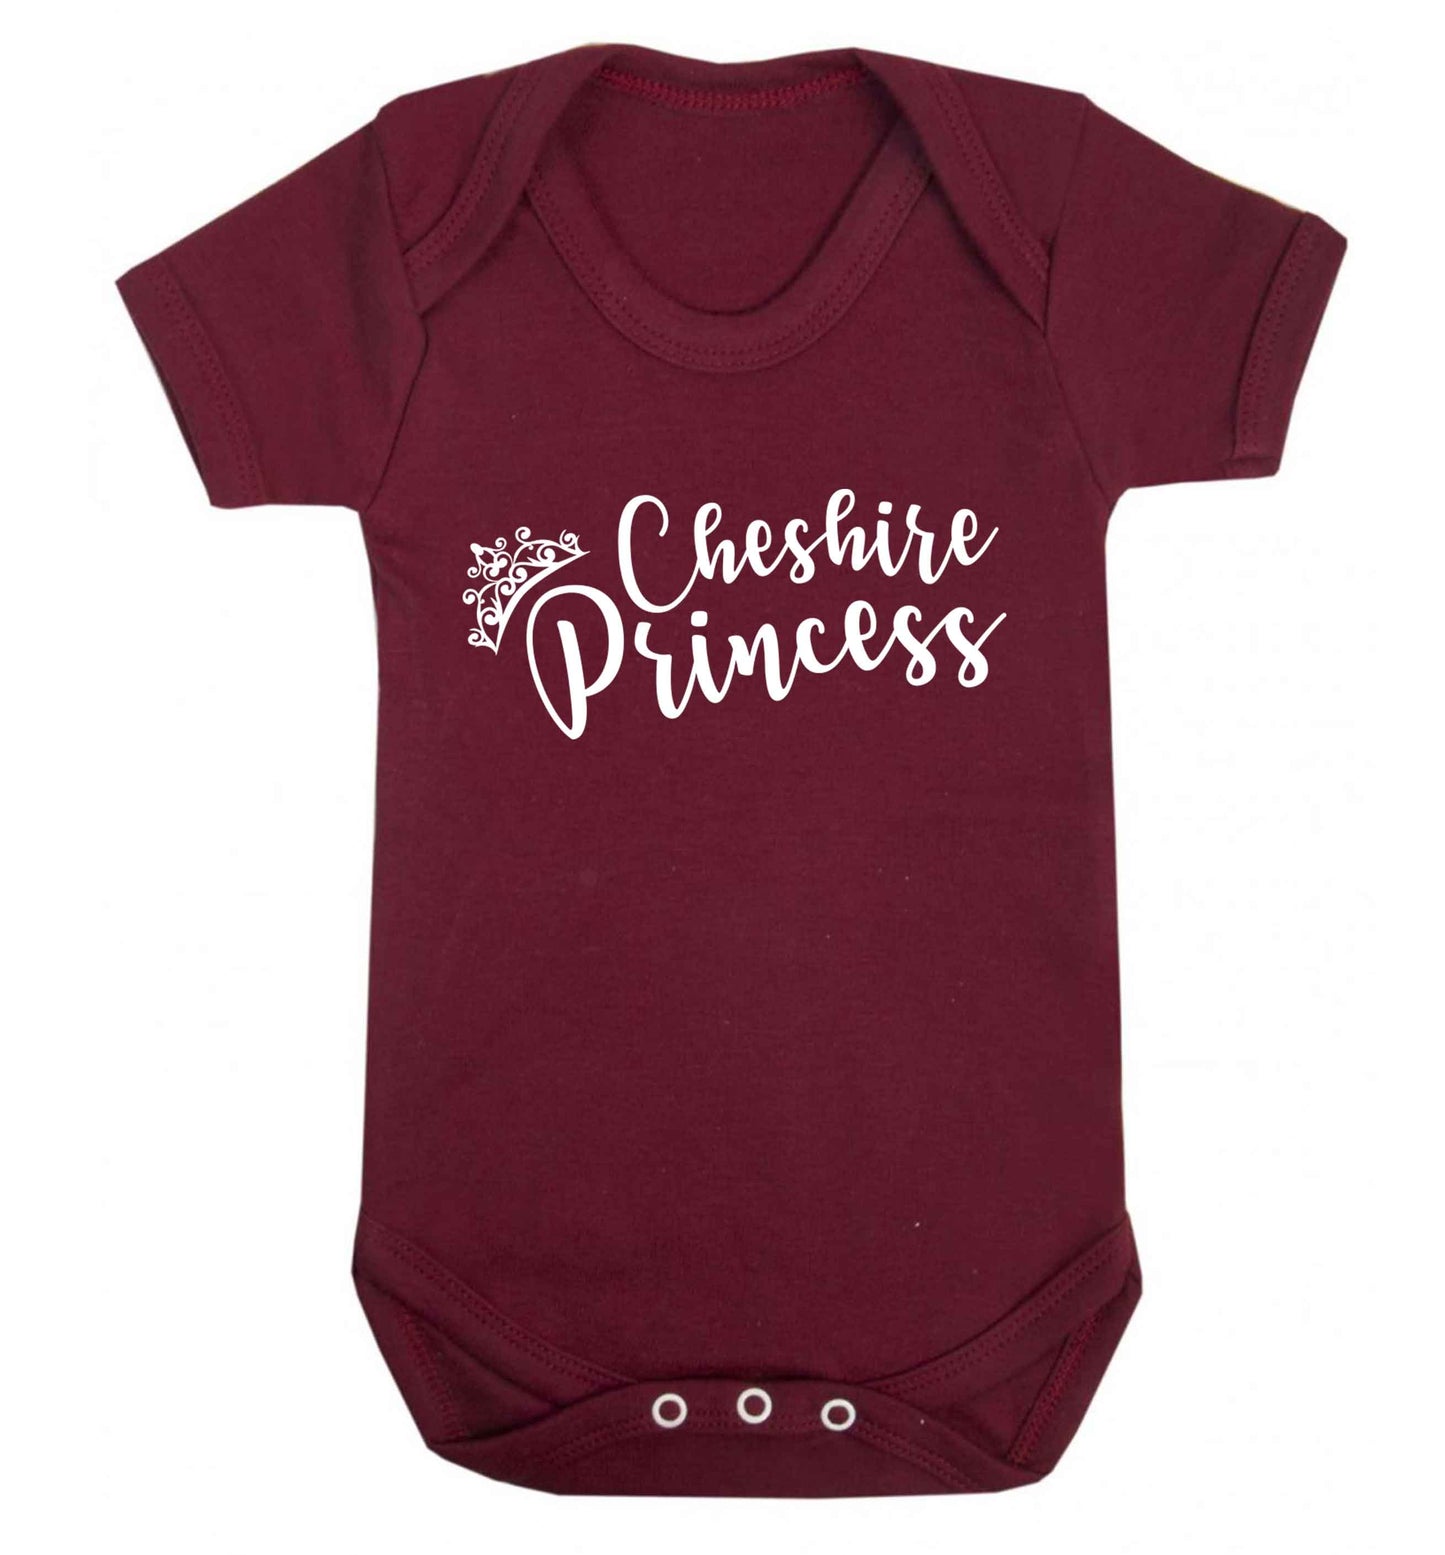 Cheshire princess Baby Vest maroon 18-24 months